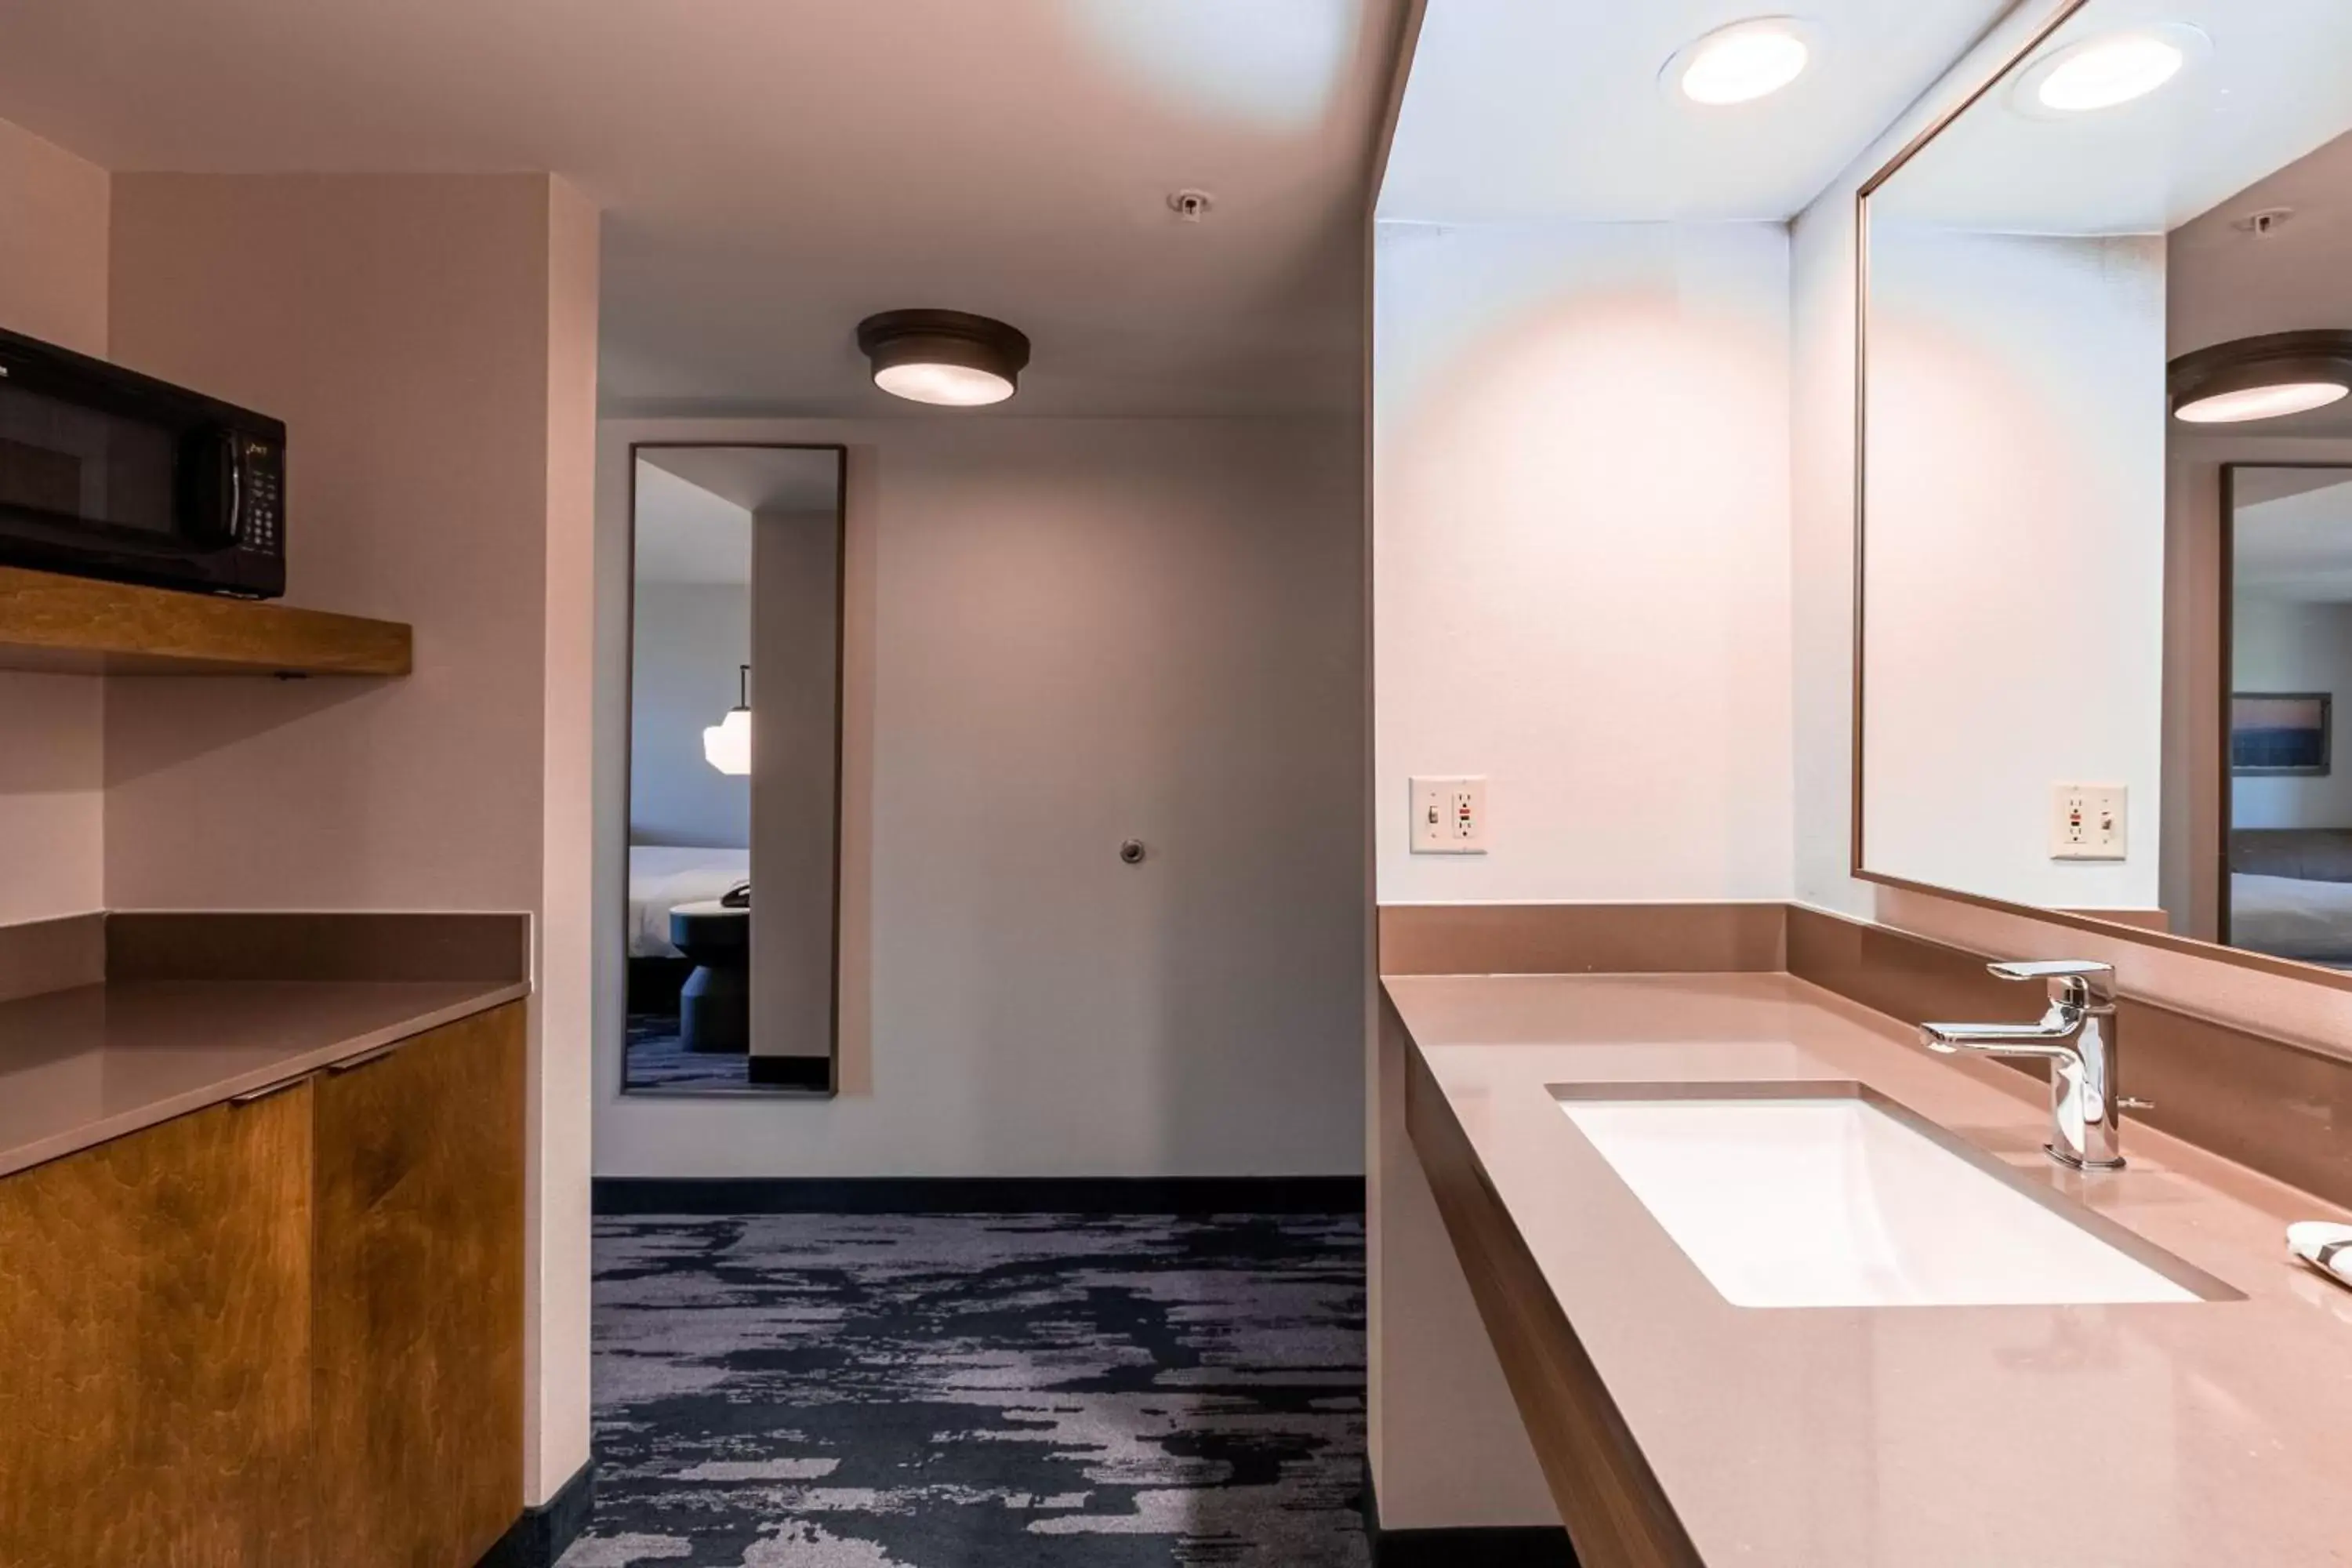 Photo of the whole room, Bathroom in Fairfield Inn by Marriott Evansville West